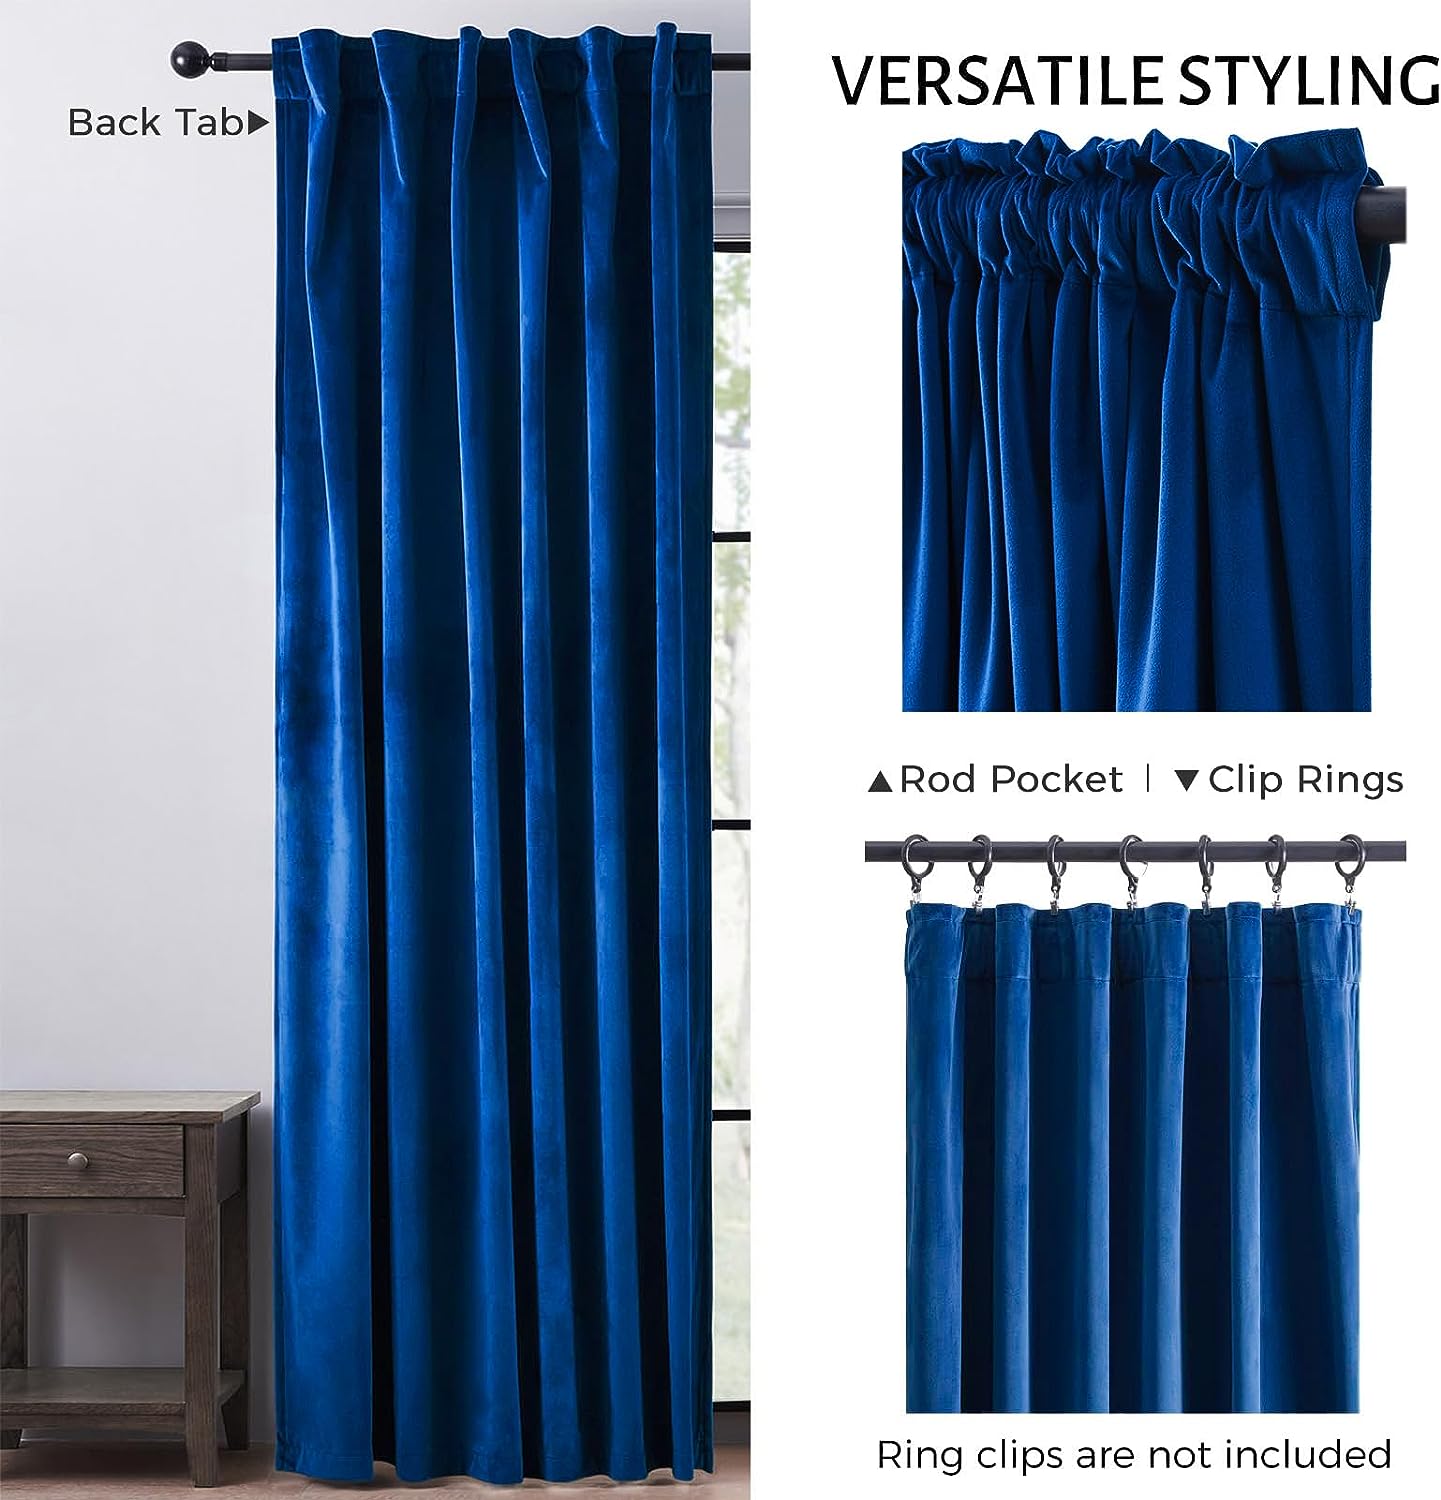 Extra Long Dark Blue Velvet Curtains 108 Inches Length 2 Panels Burg for Living Room Luxury Boho Retro Home Decor Room Darkening Curtains 108 Inches Long for Bedroom/Villa,W52 x L108,Royal Blue